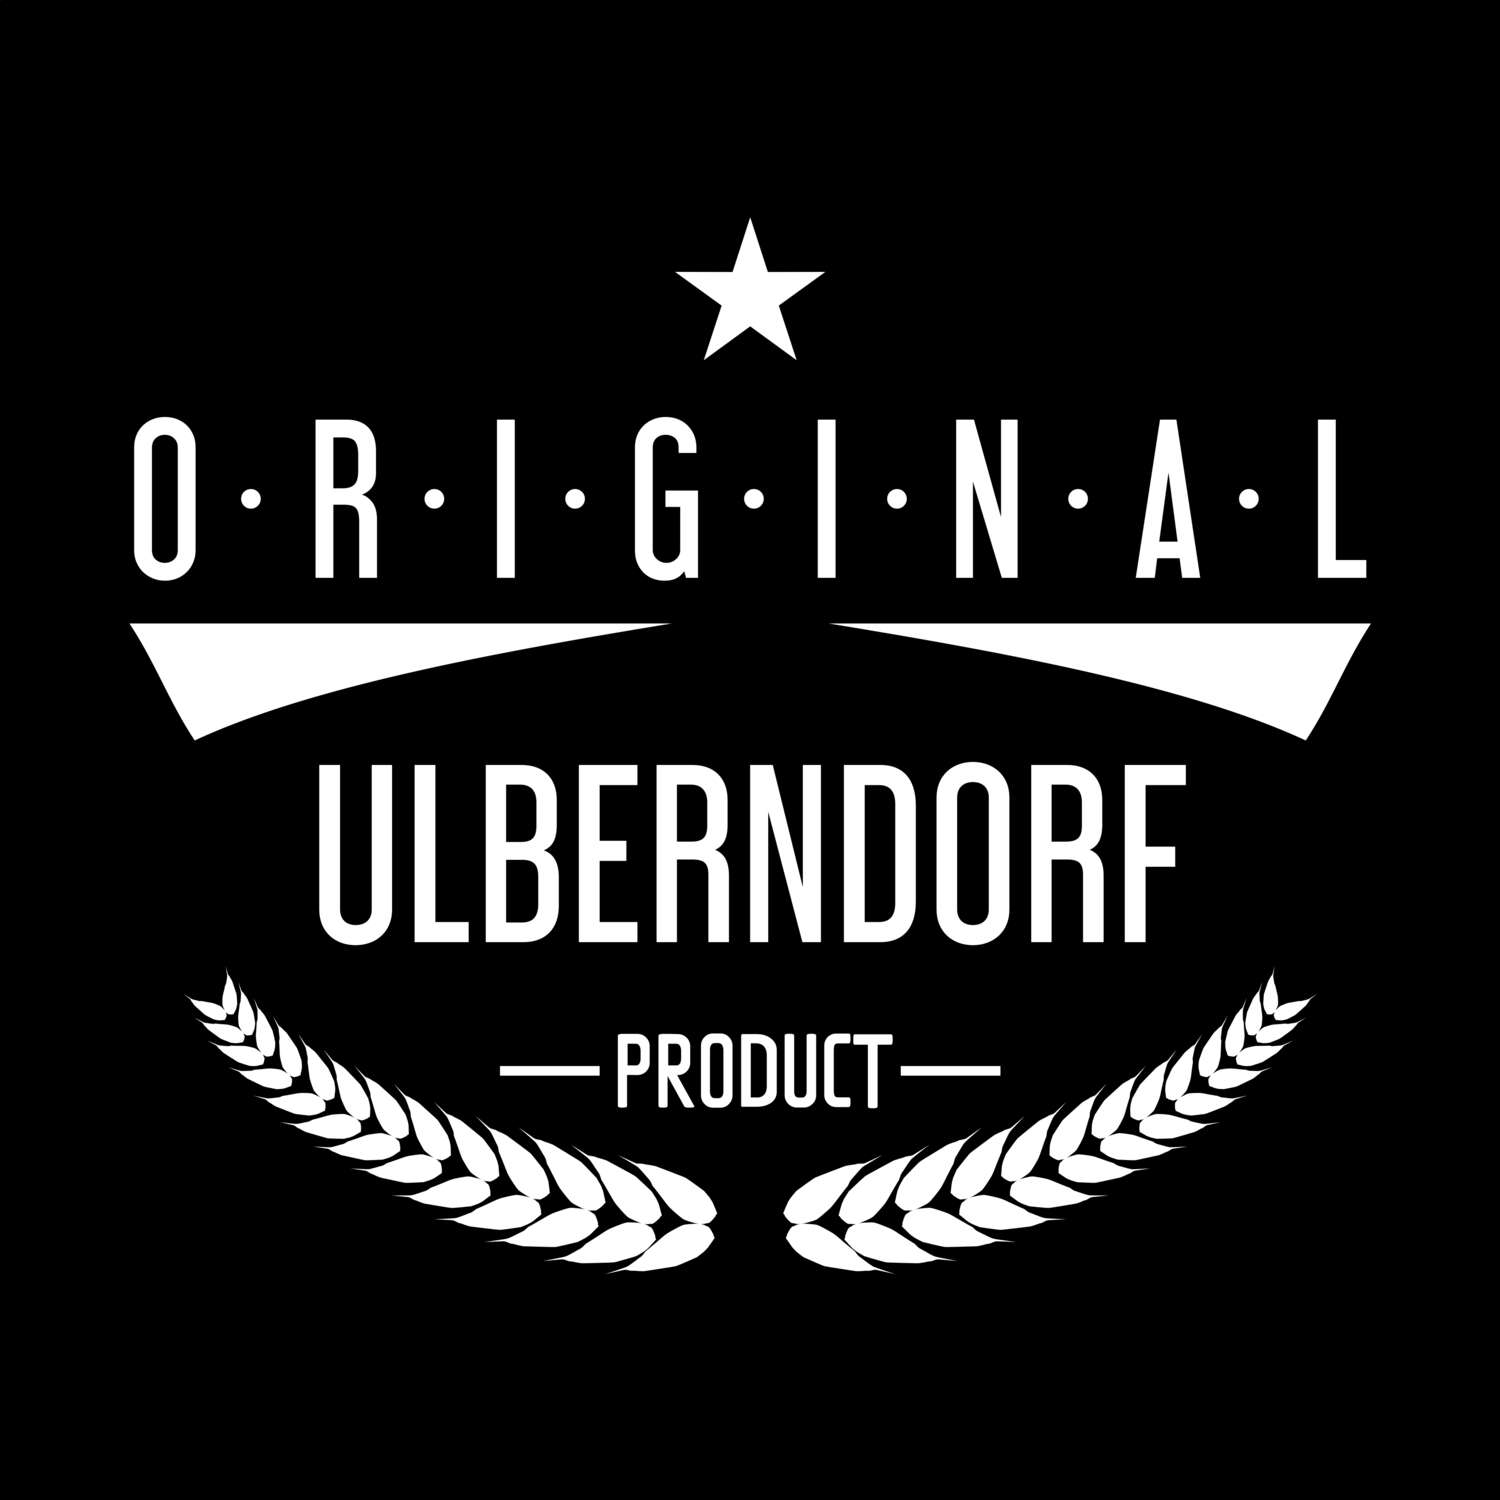 Ulberndorf T-Shirt »Original Product«